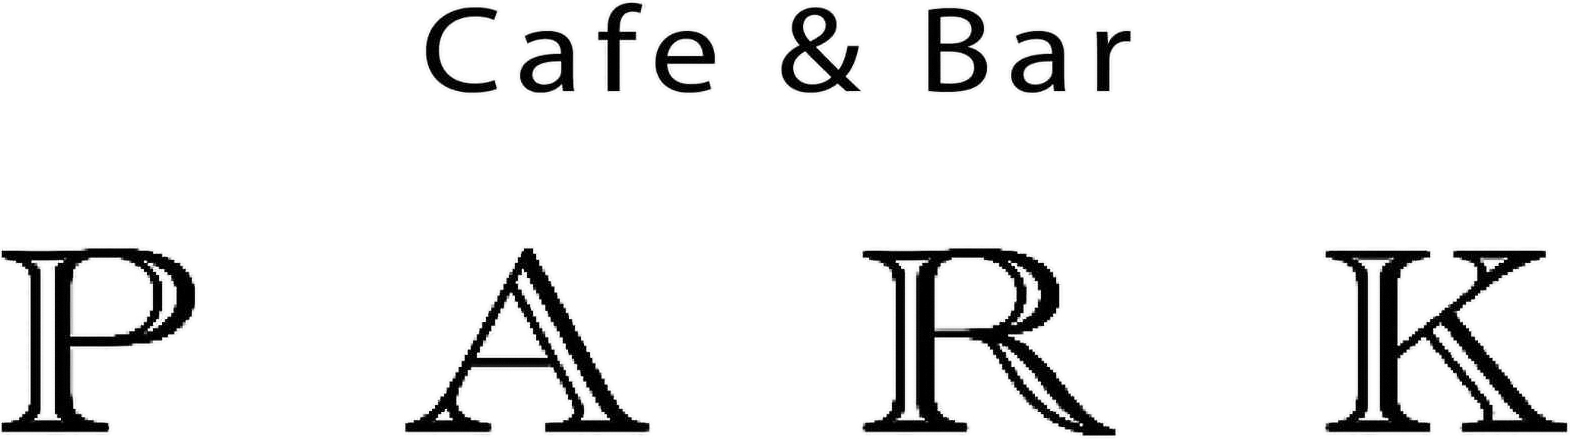 Cafe & Bar PARK